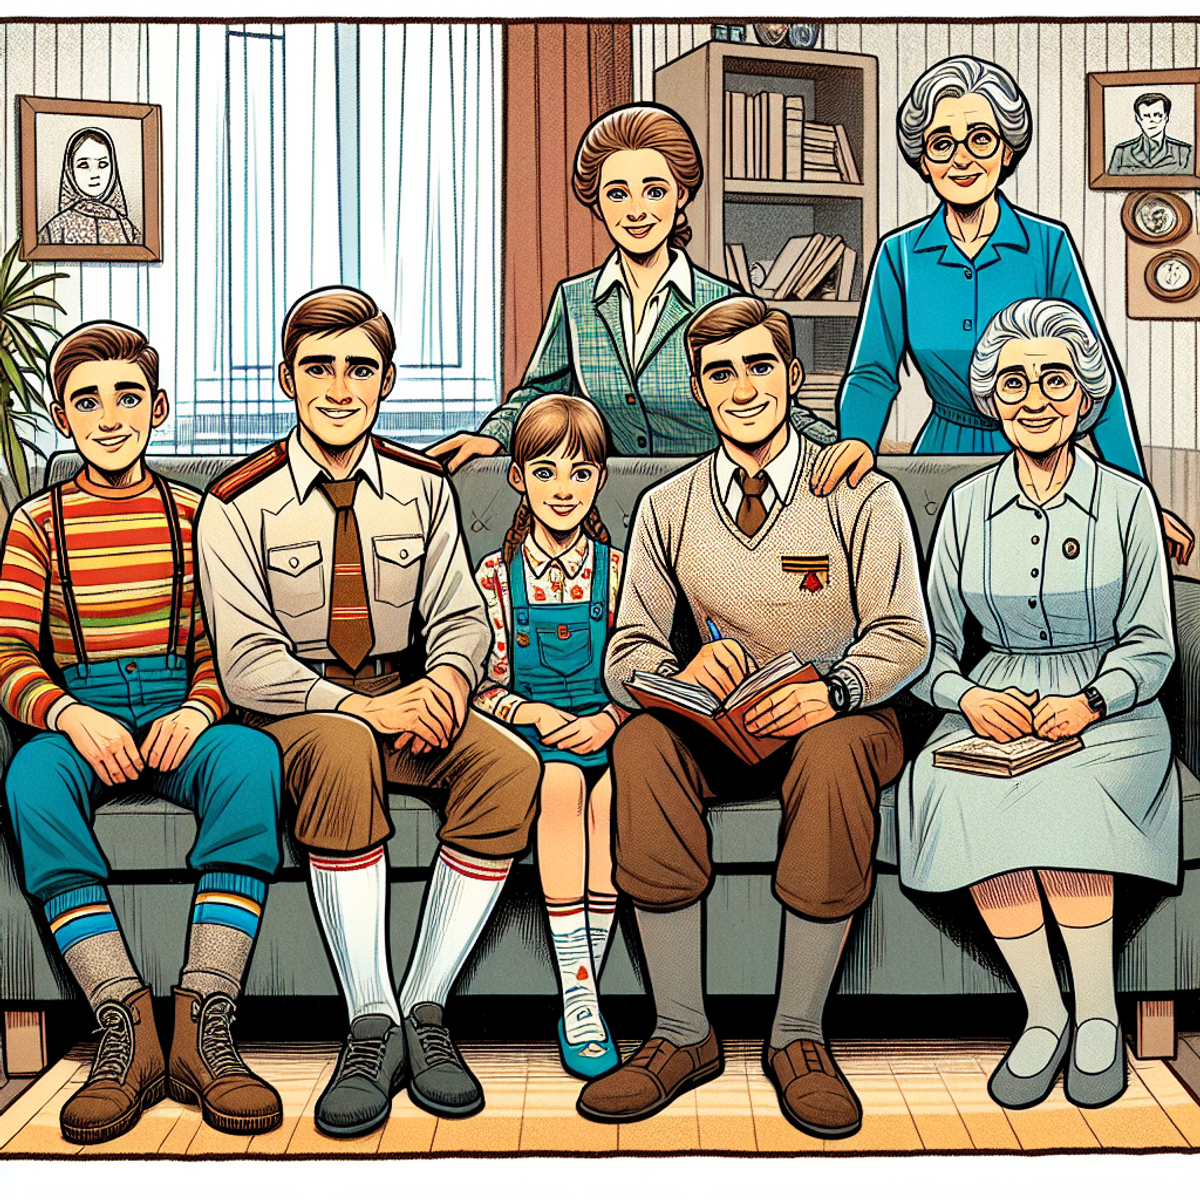 A digital art rendering of a vintage family photo album, symbolizing the nostalgic memories of the Stogov family.